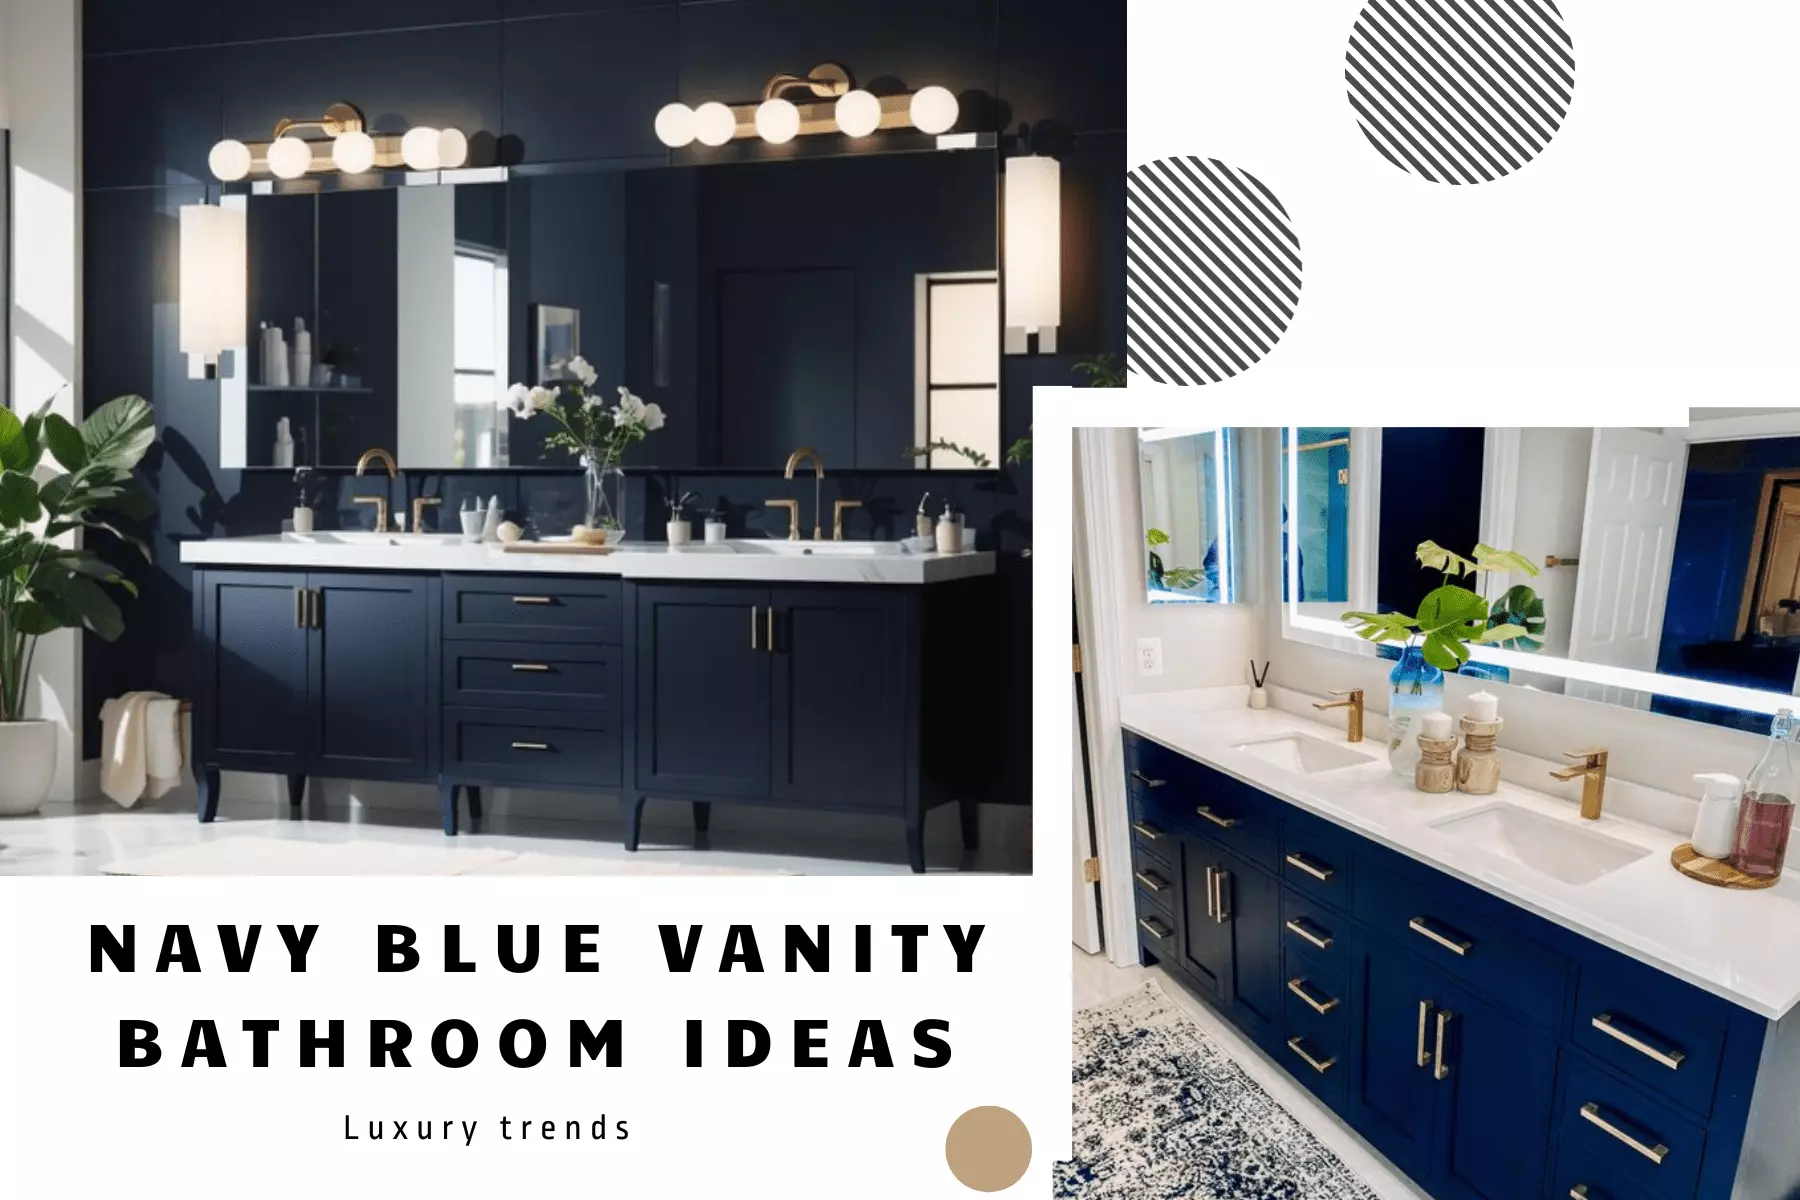 Navy blue vanity bathroom ideas